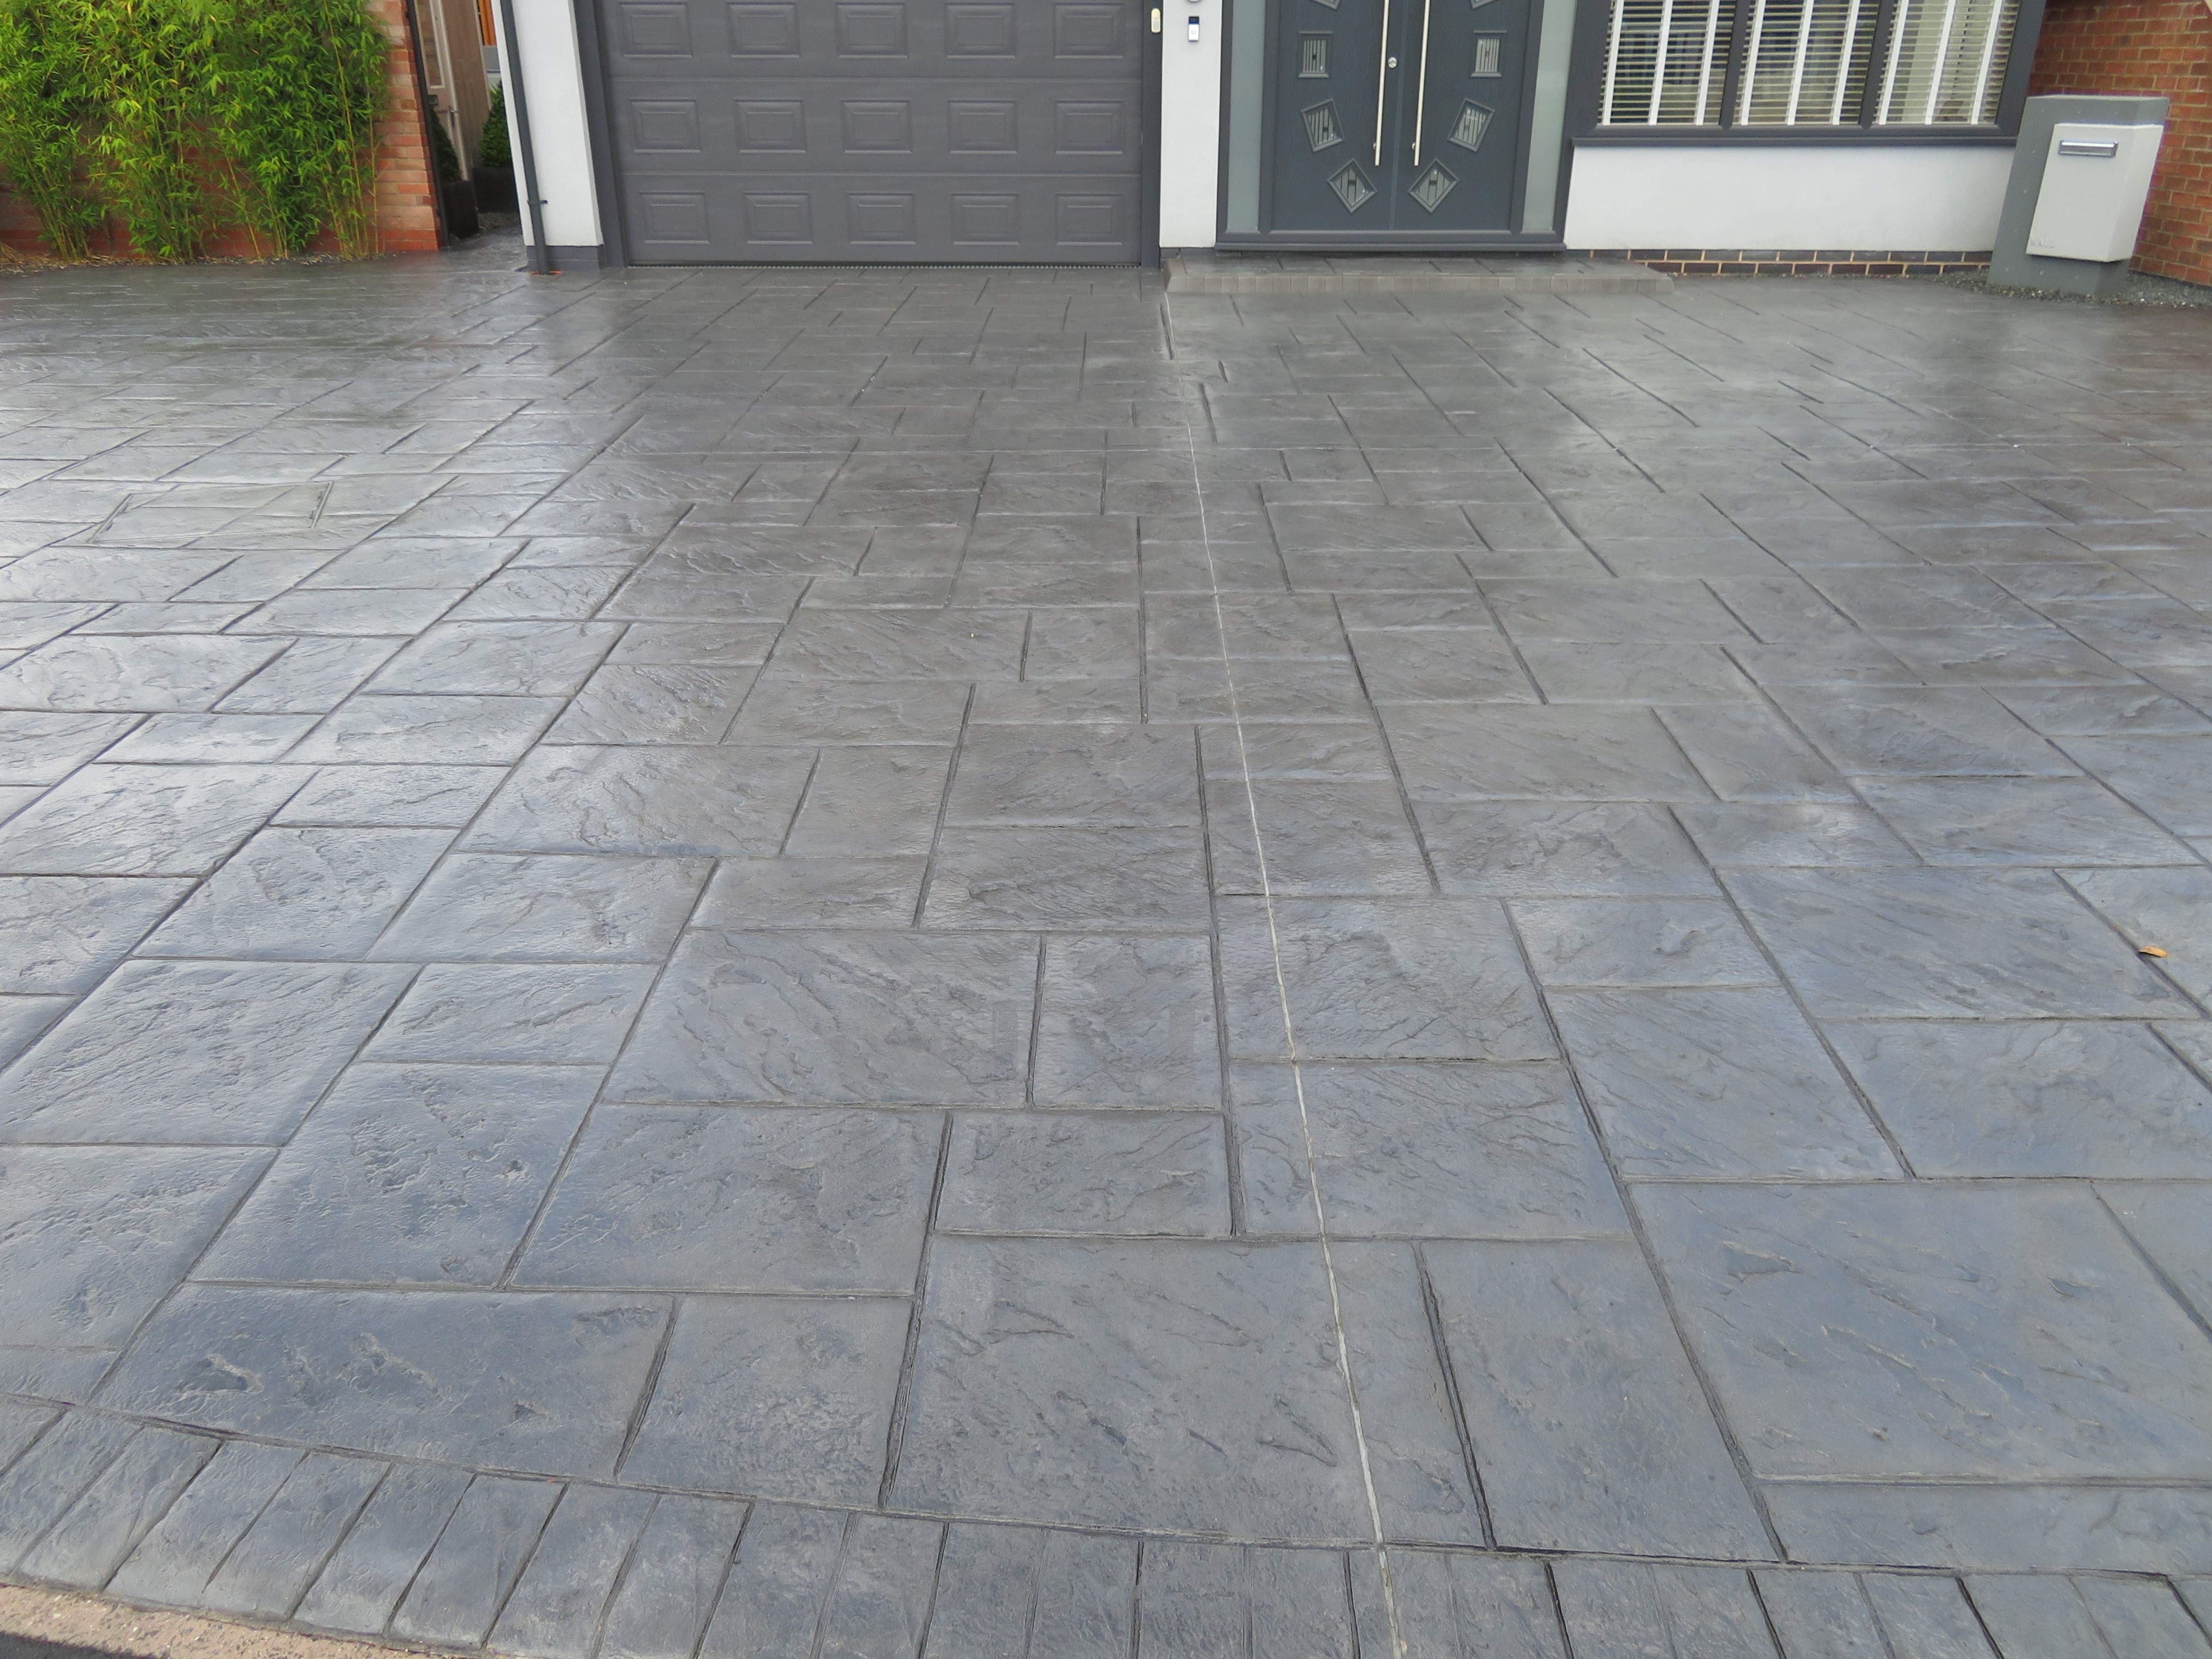 Pattern Imprinted Concrete Pathway done in Large Ashlar Pattern